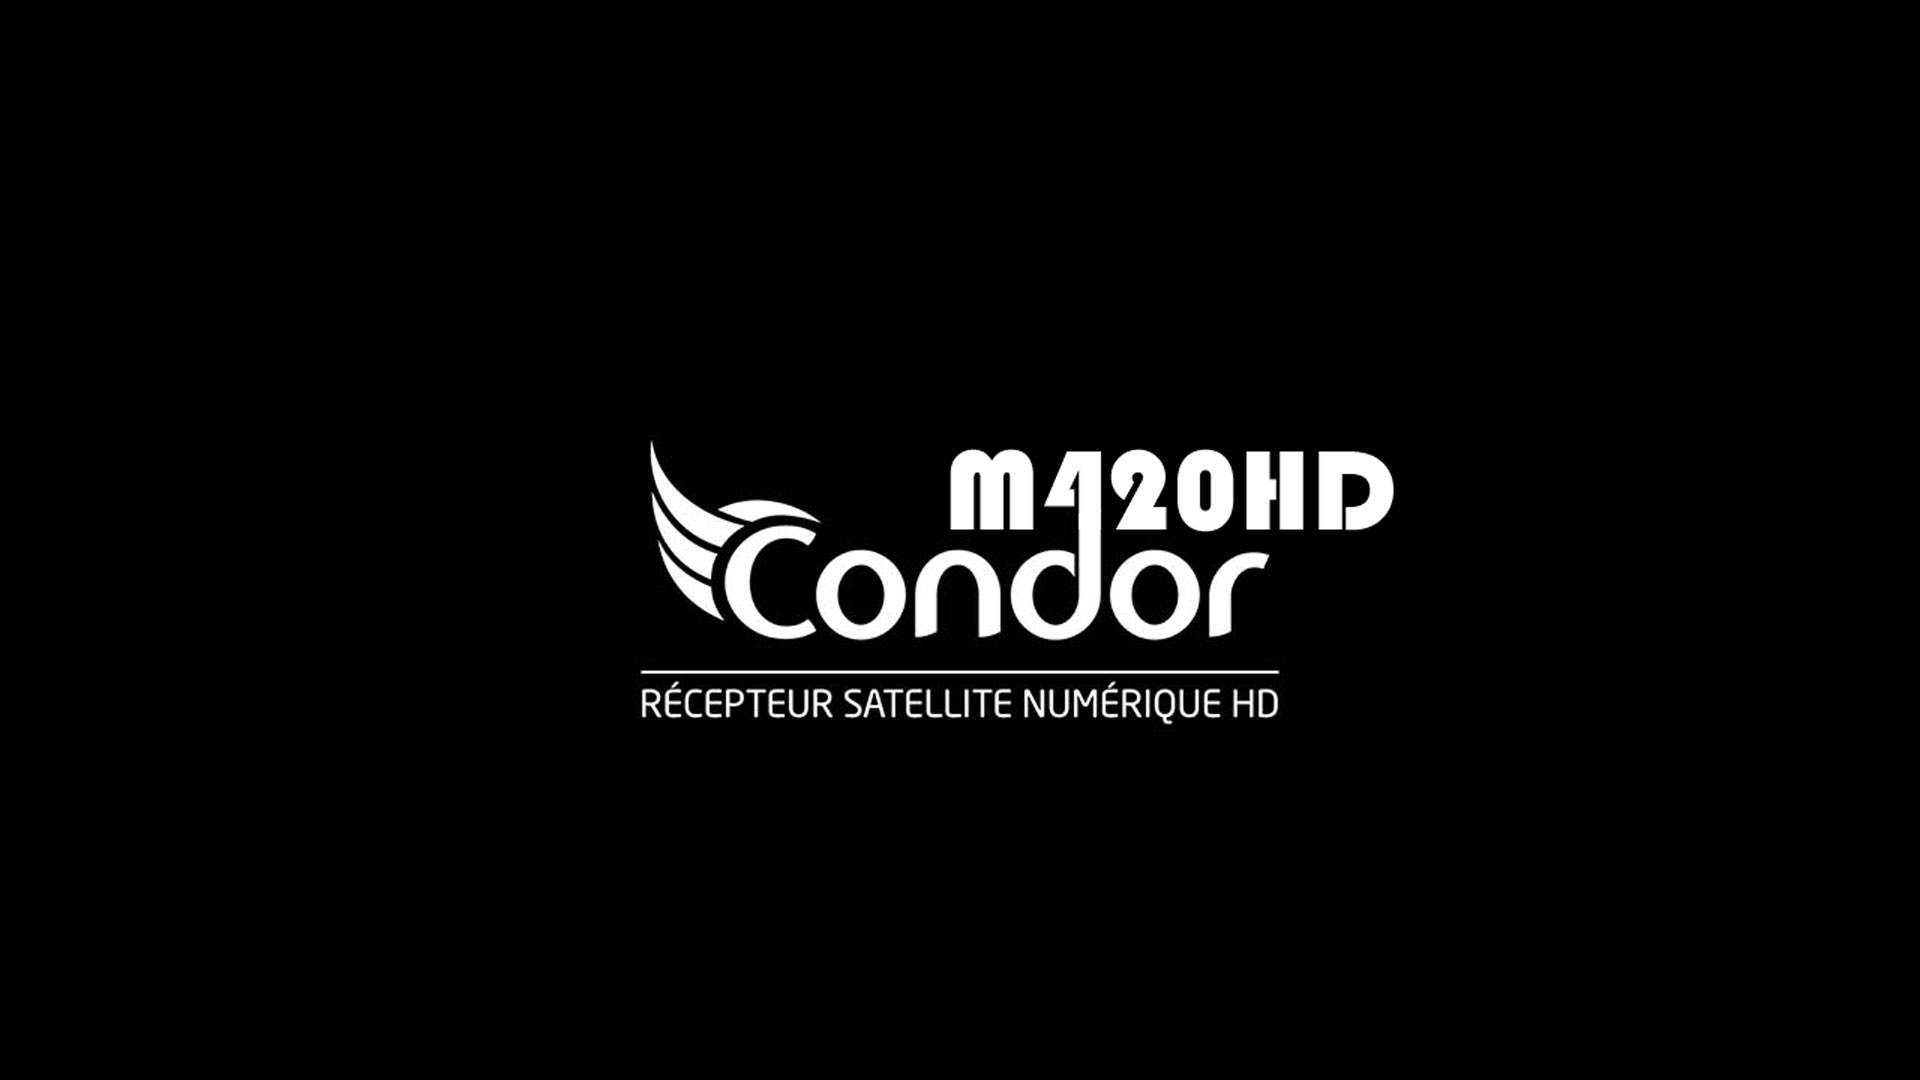 Download Software Condor M420 HD TGX40 Update Firmware Receiver